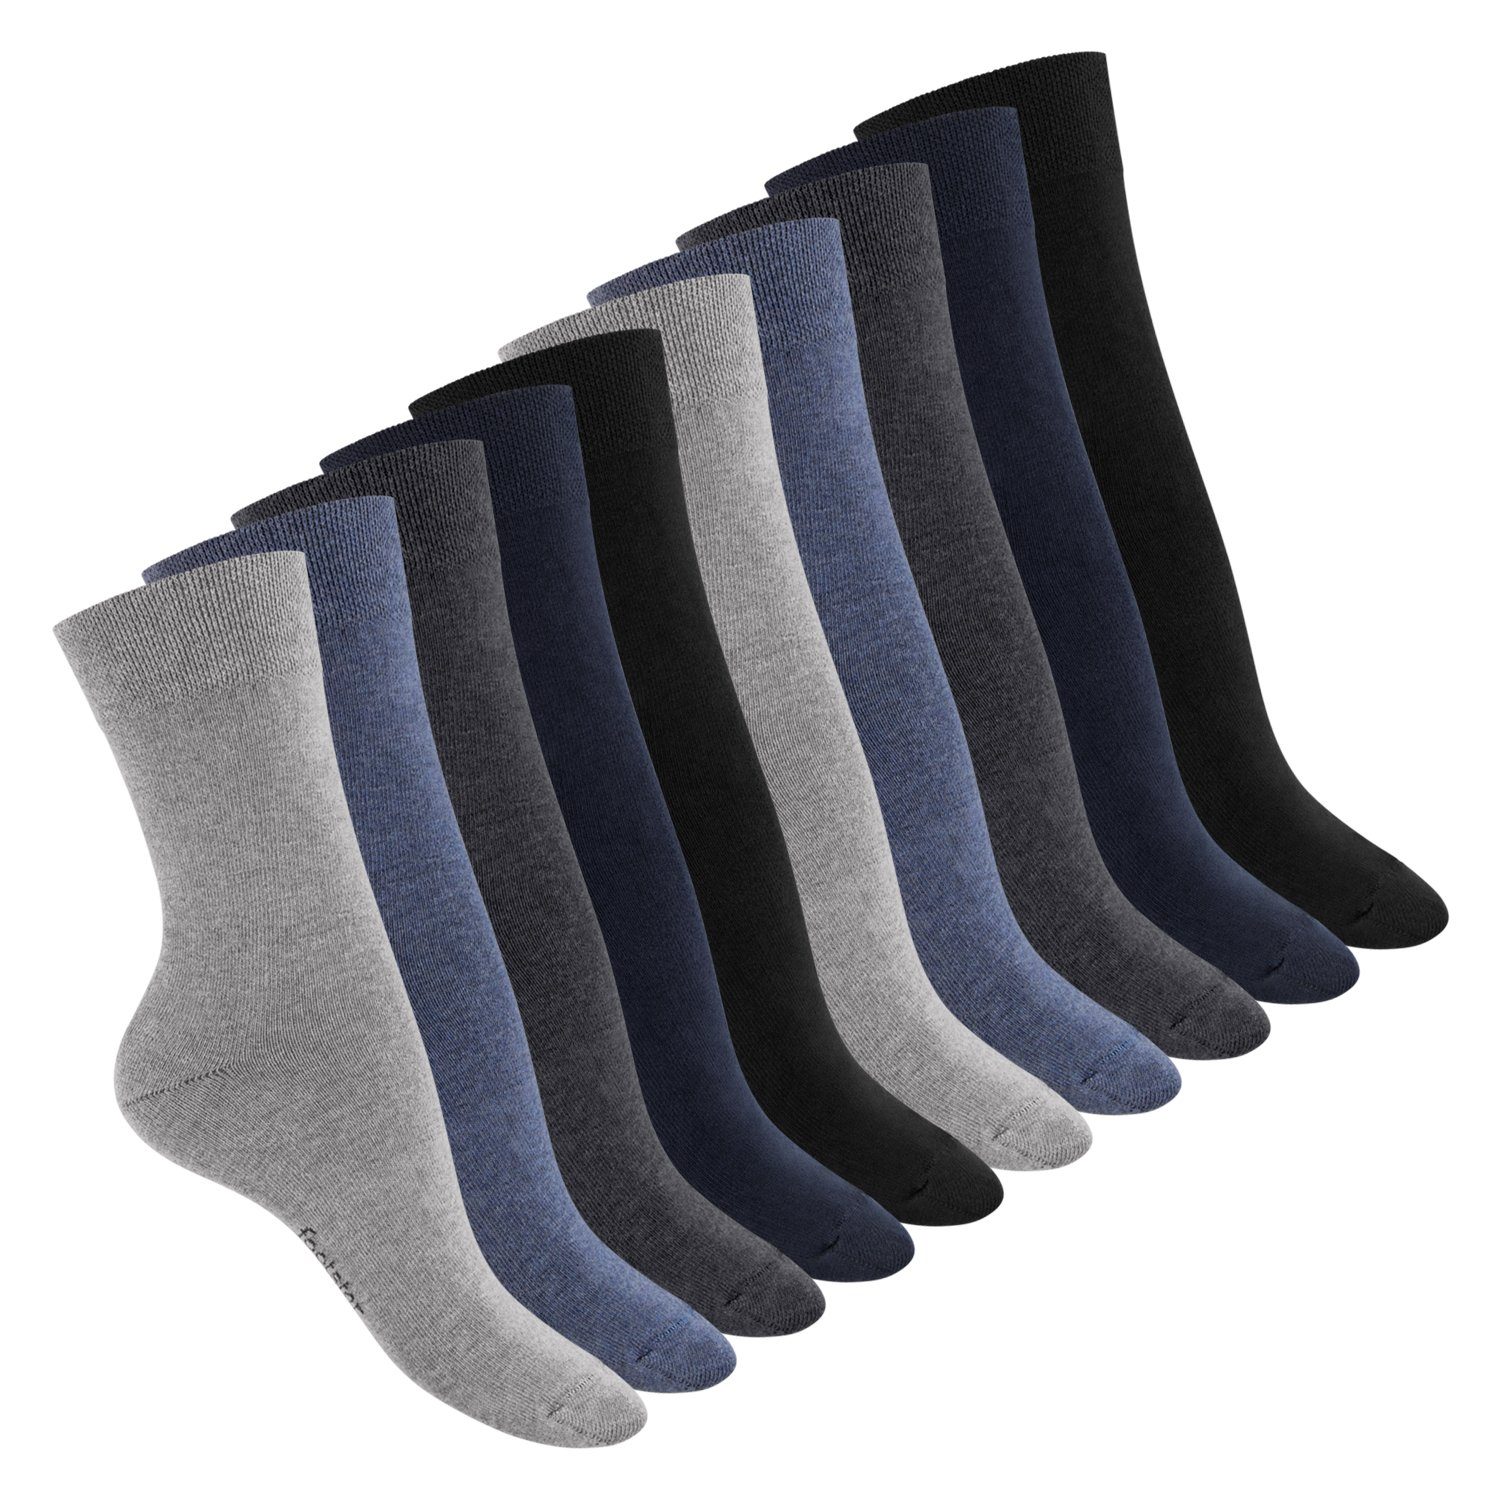 Footstar Basicsocken Everyday! Damen Baumwollsocken (10 Paar) mit flacher Spitze 10 x Jeans | Lange Socken